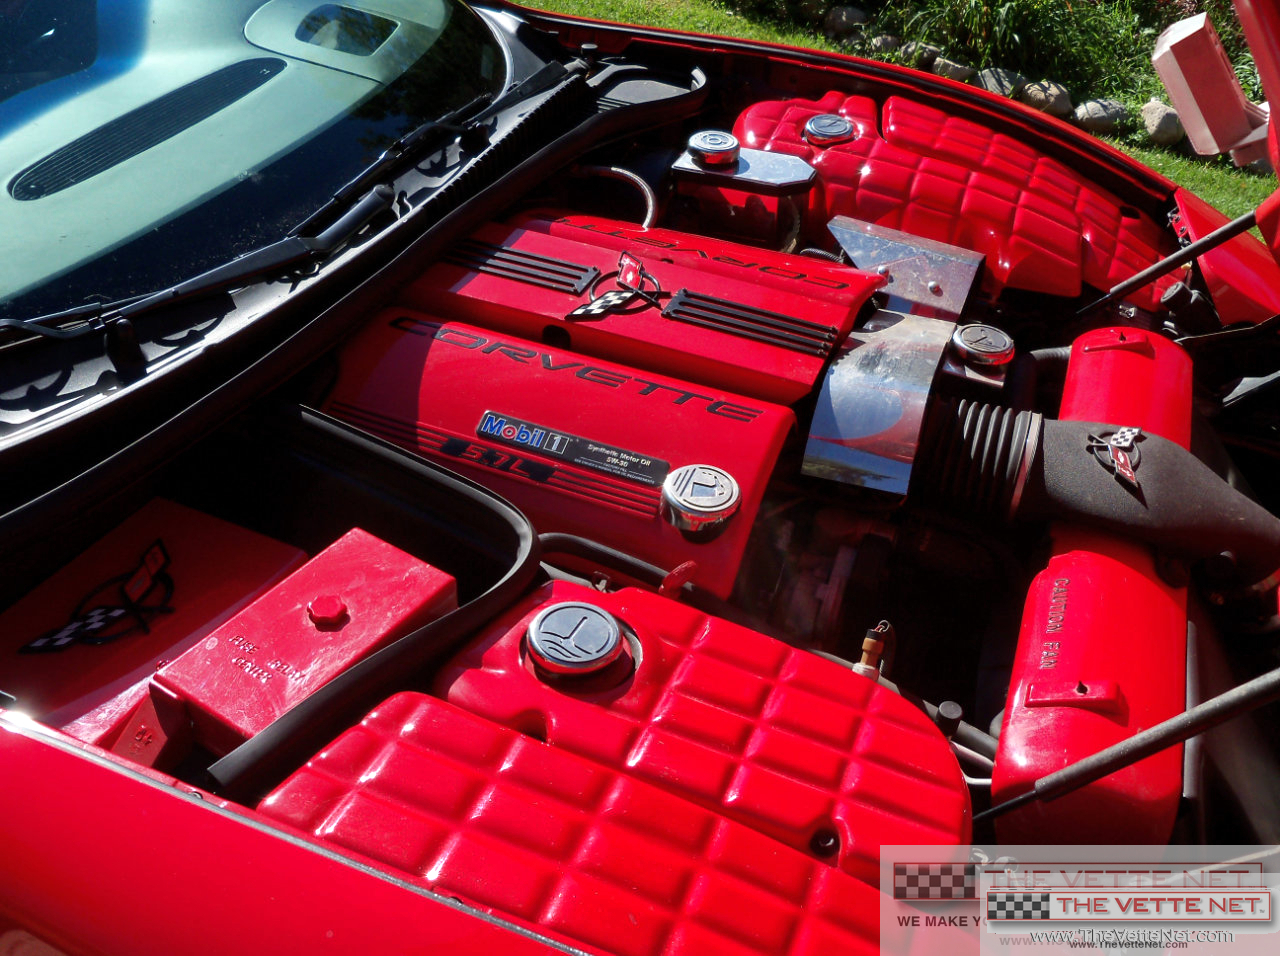 2002 Corvette Coupe Torch Red